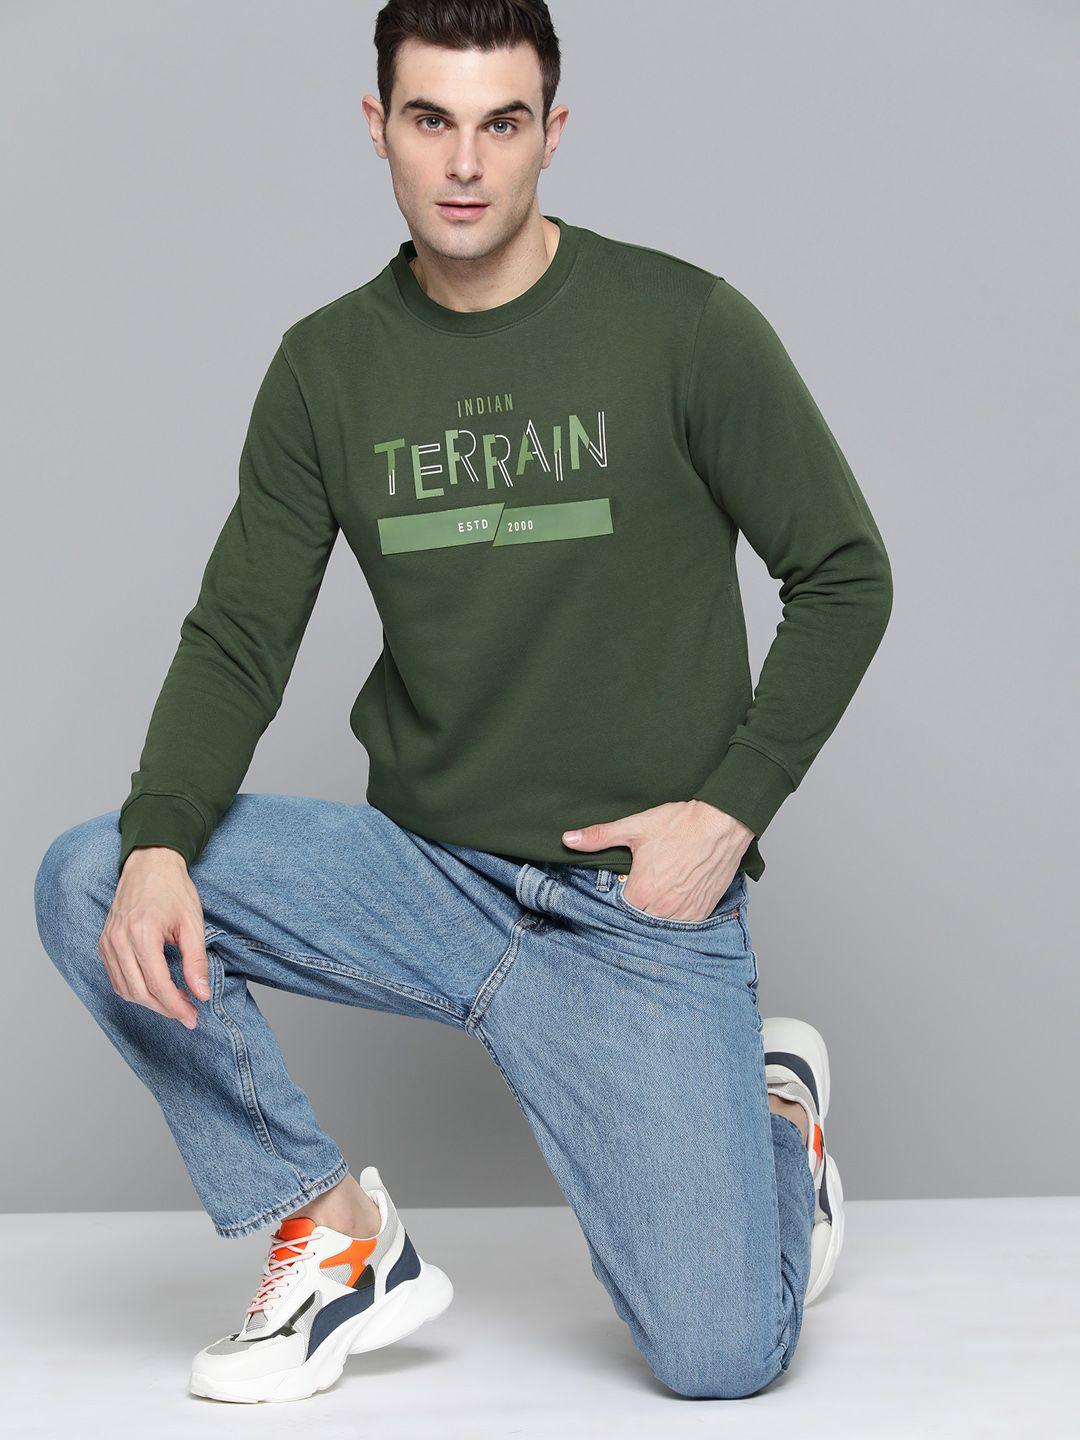 indian terrain brand logo printed sweatshirt